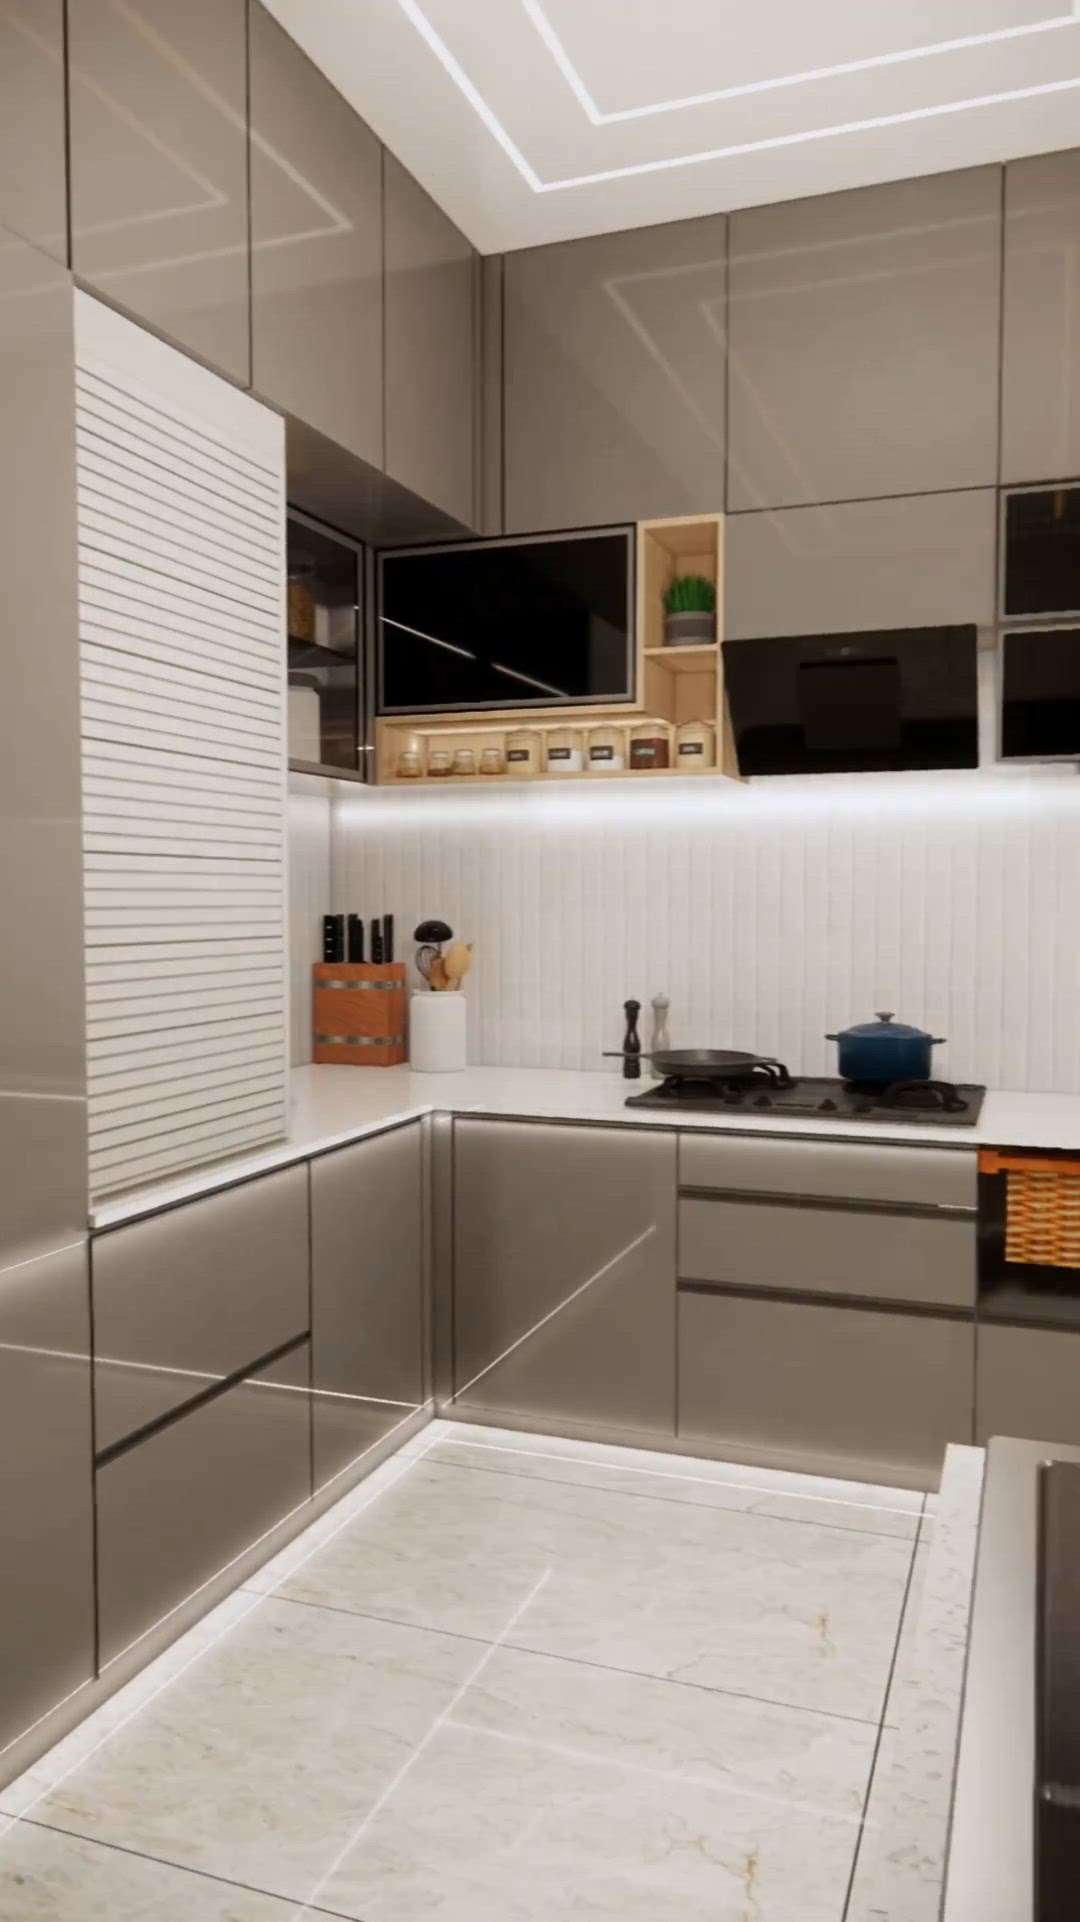 Modular kitchen latest design by Majestic modular kitchens Pvt Ltd.
#modularkitchendesign
#LShapeKitchen
#kitchenmanufecturer
#kitchenmakeover
#kitchenmanufacturer
#ACRYLICKITCHEN
#HIGHGLOSSKITCHEN
#STAINLESSSTEELKITCHENS
#livspacefaridabad
#livspace
#modular_kitchen
#latestkitchendesign
#kitchendesign
#ModularKitchen
#interior_designer_in_faridabad
#palwal
#kitchencabinets
WWW.MAJESTICINTERIORS.CO.IN
9911692170